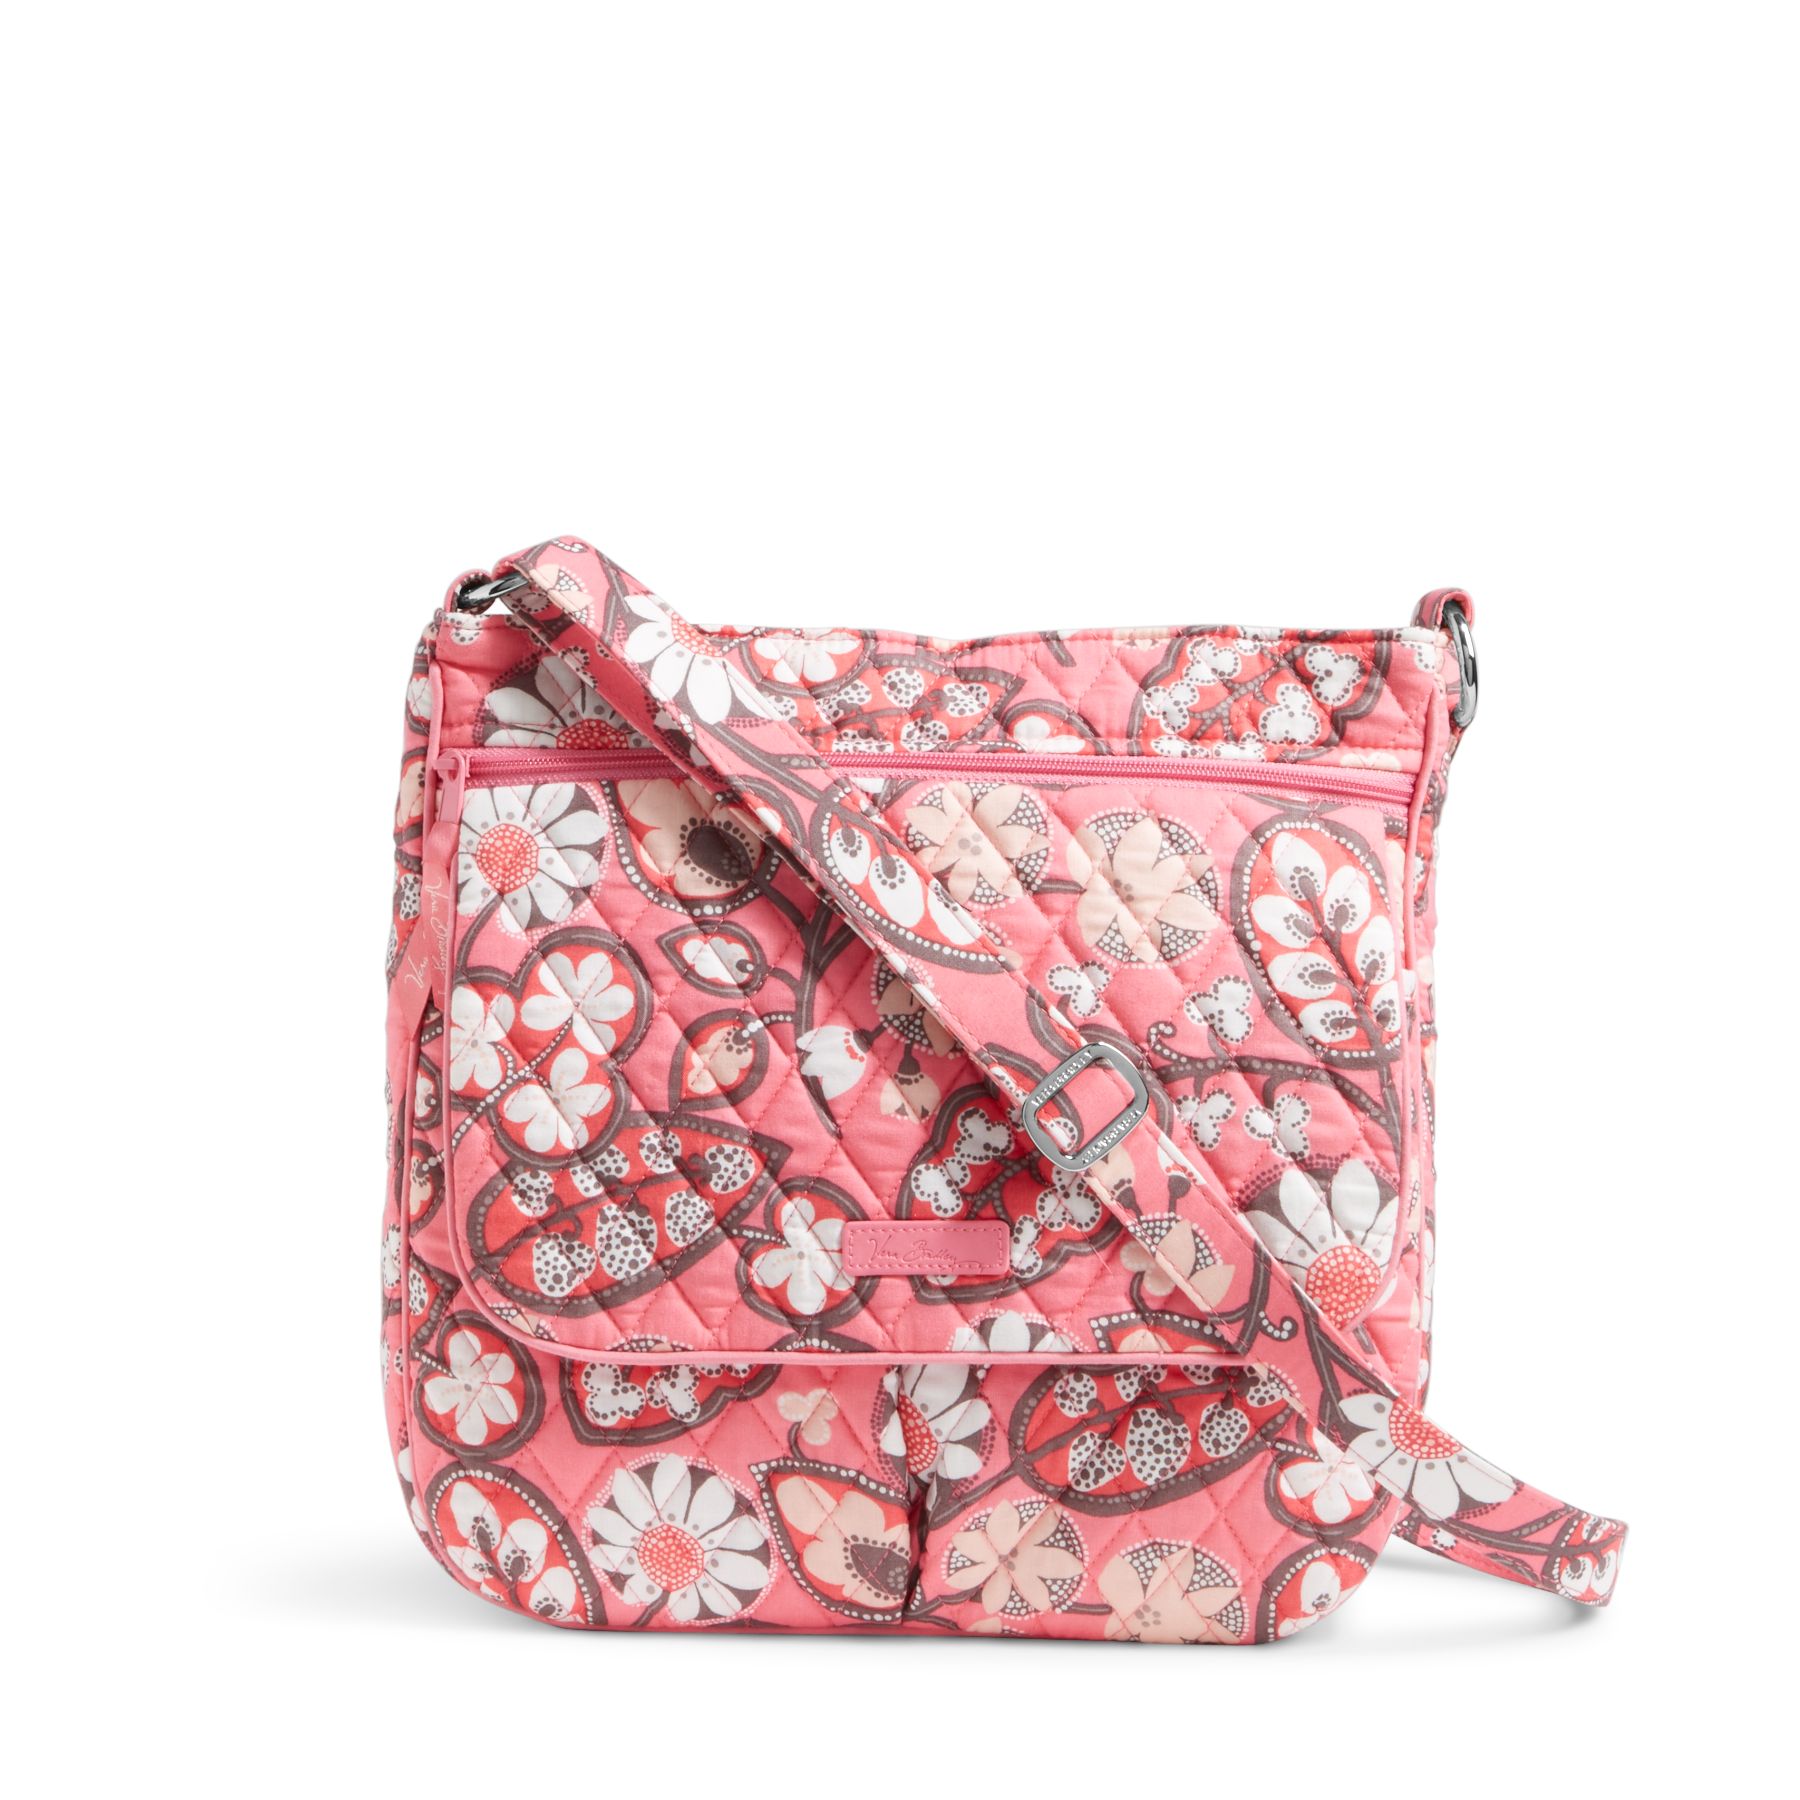 Vera Bradley Double Zip Mailbag in Blush PinkCrossbodies